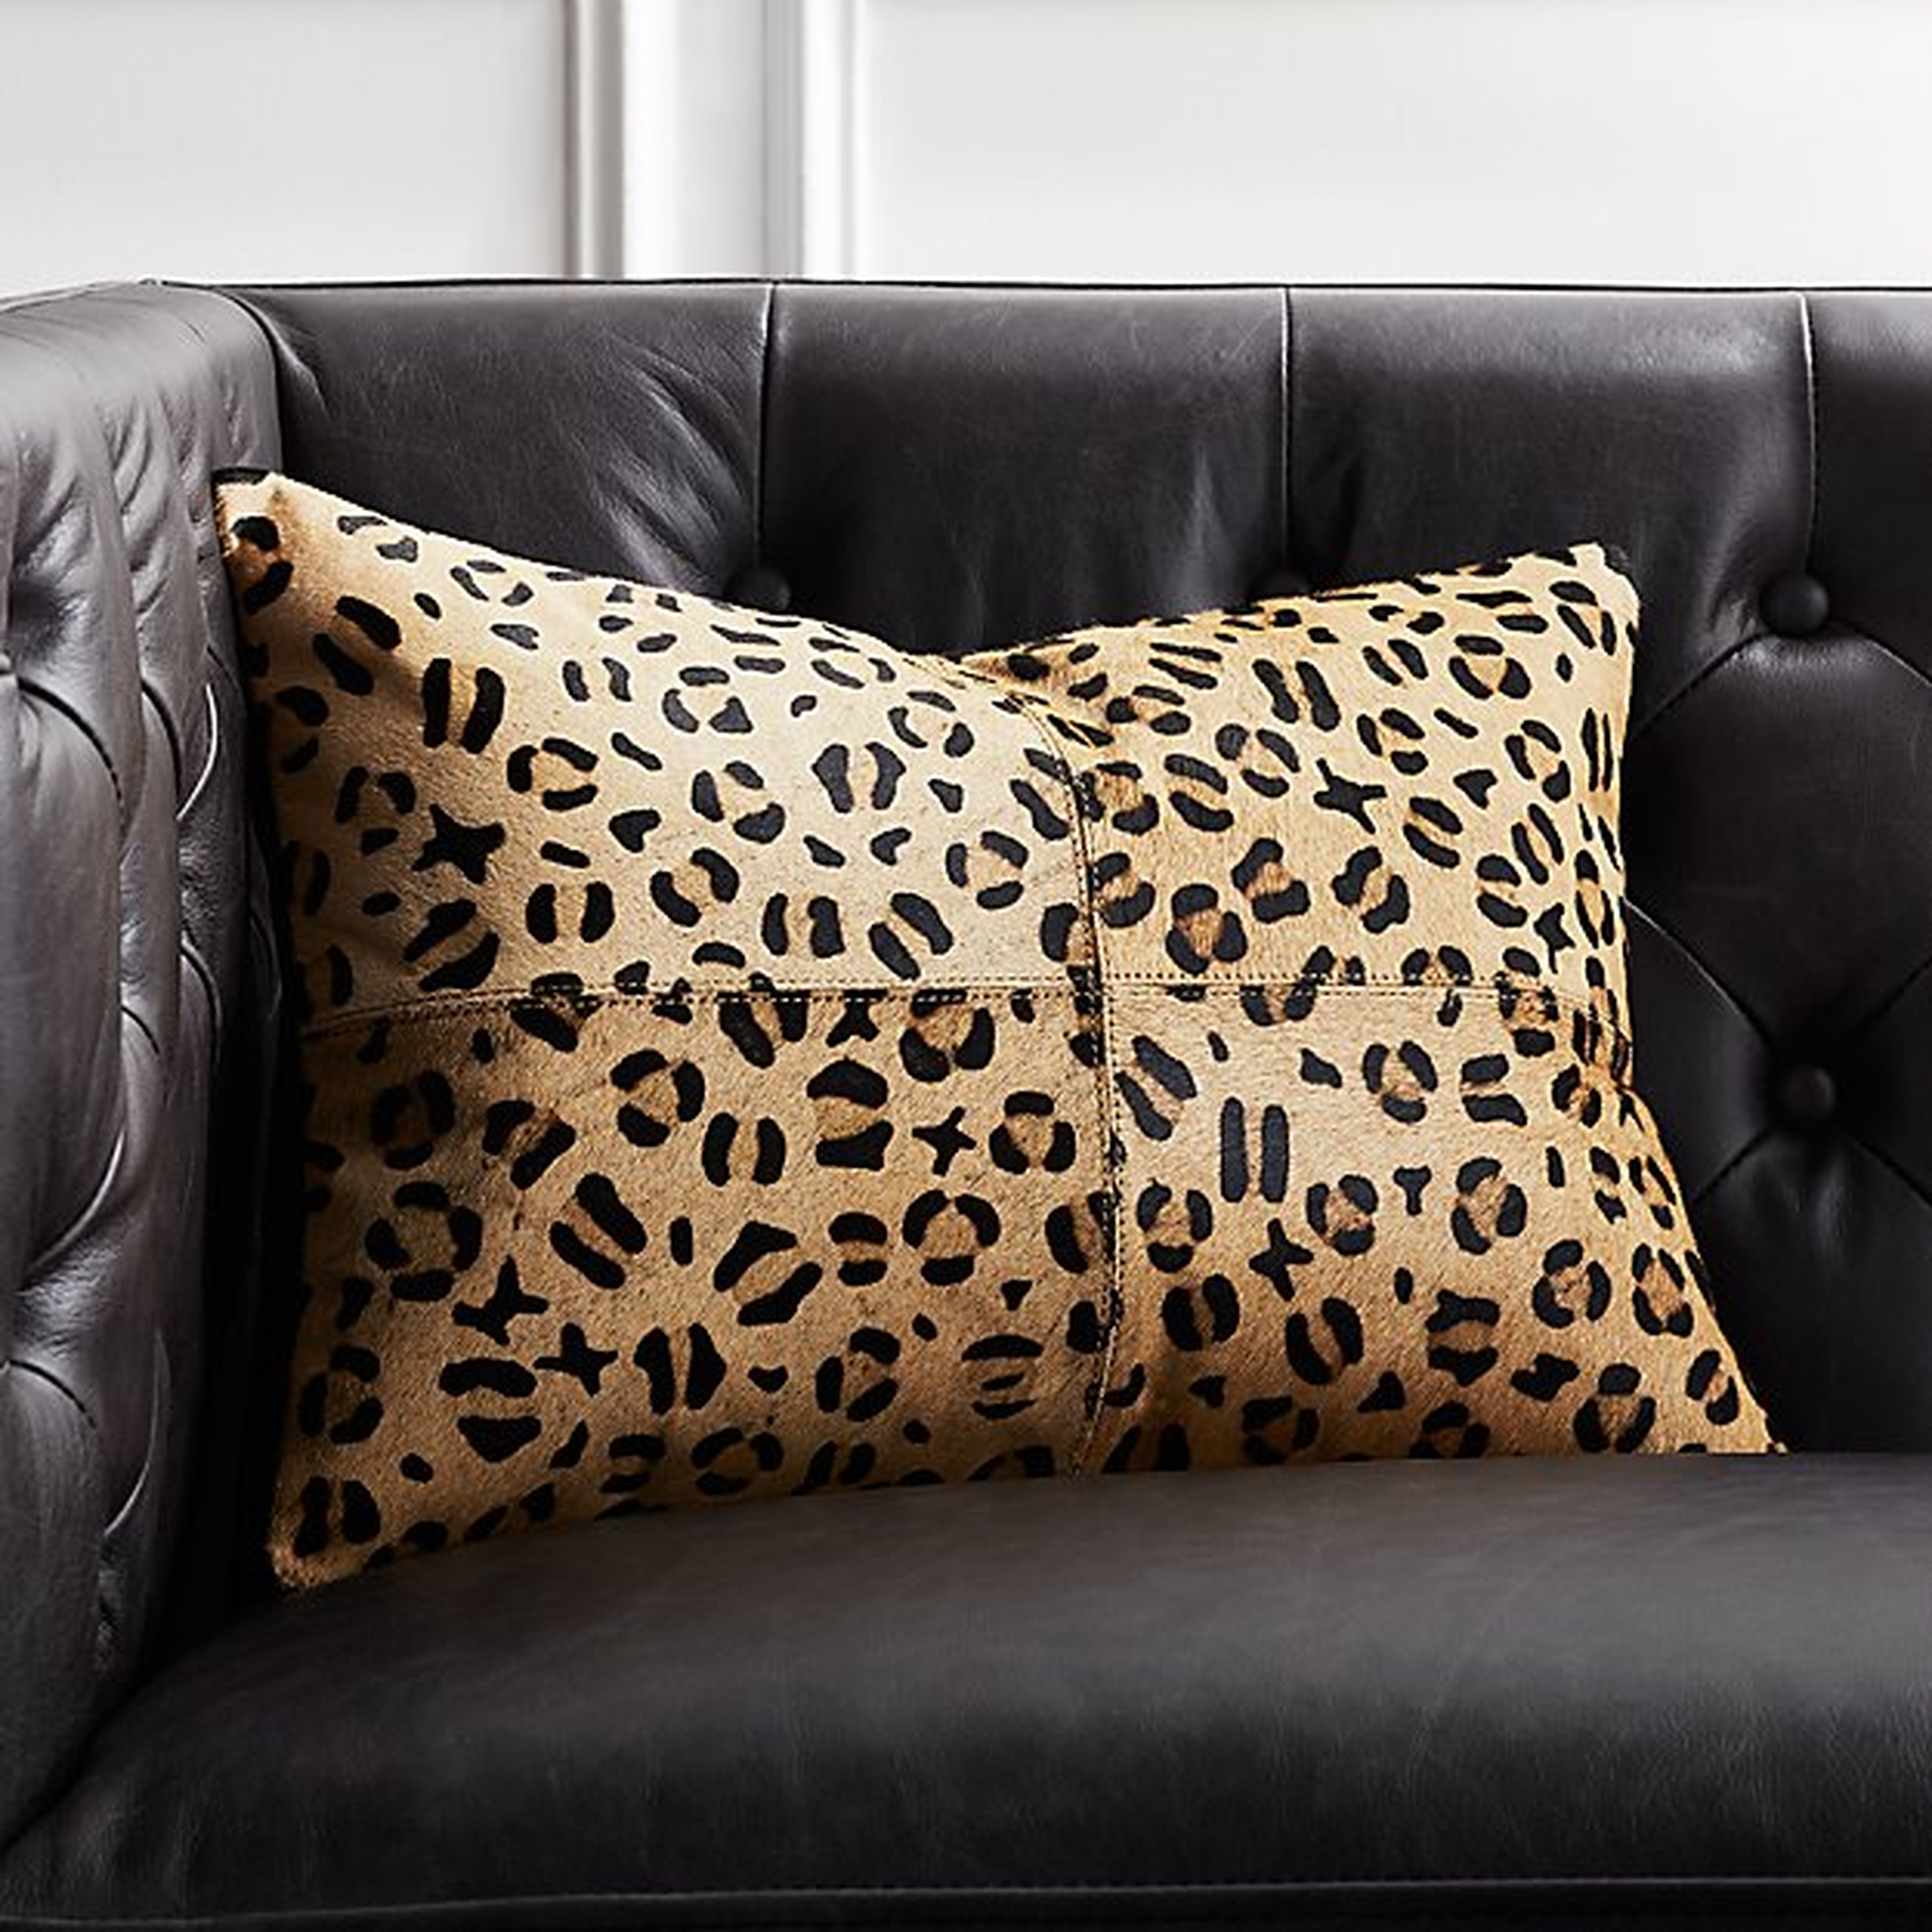 18"x12" hide cheetah print pillow with down-alternative insert - CB2